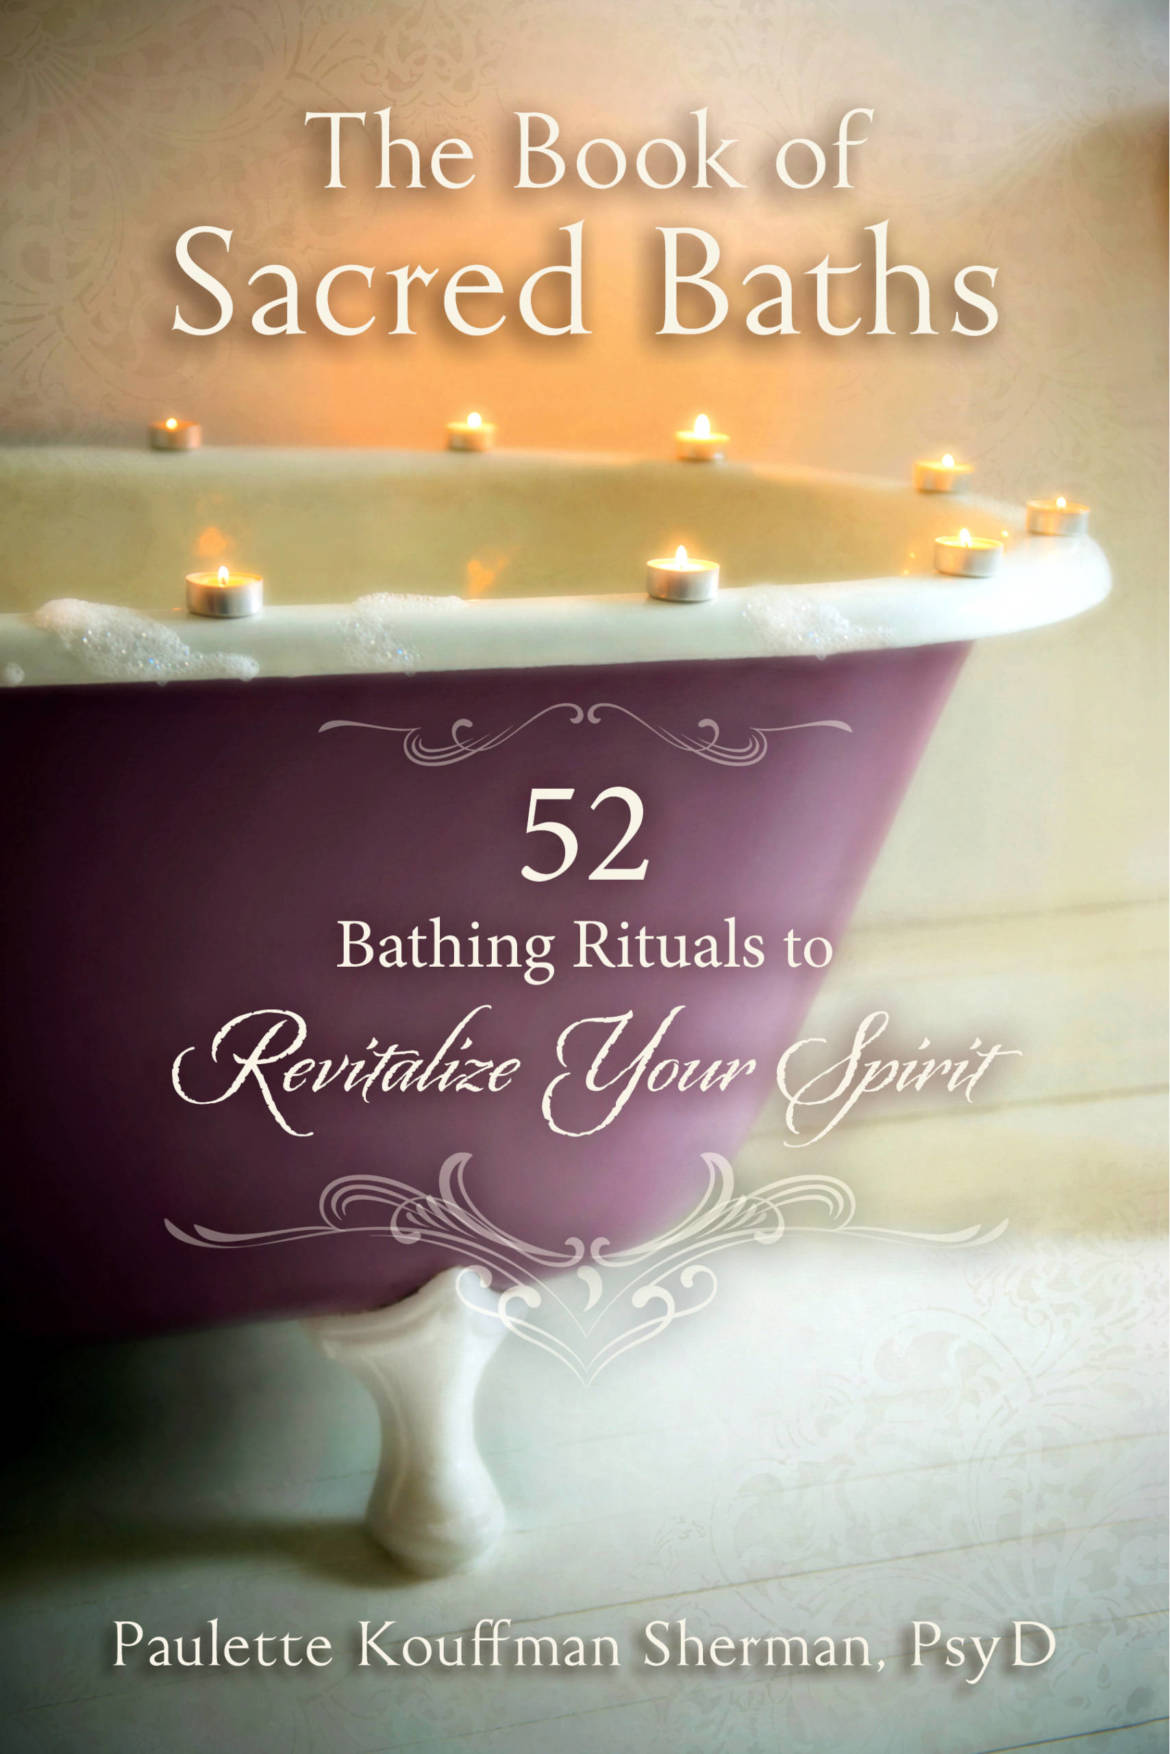 Book-of-Sacred-Baths-book-cover-scaled.jpg